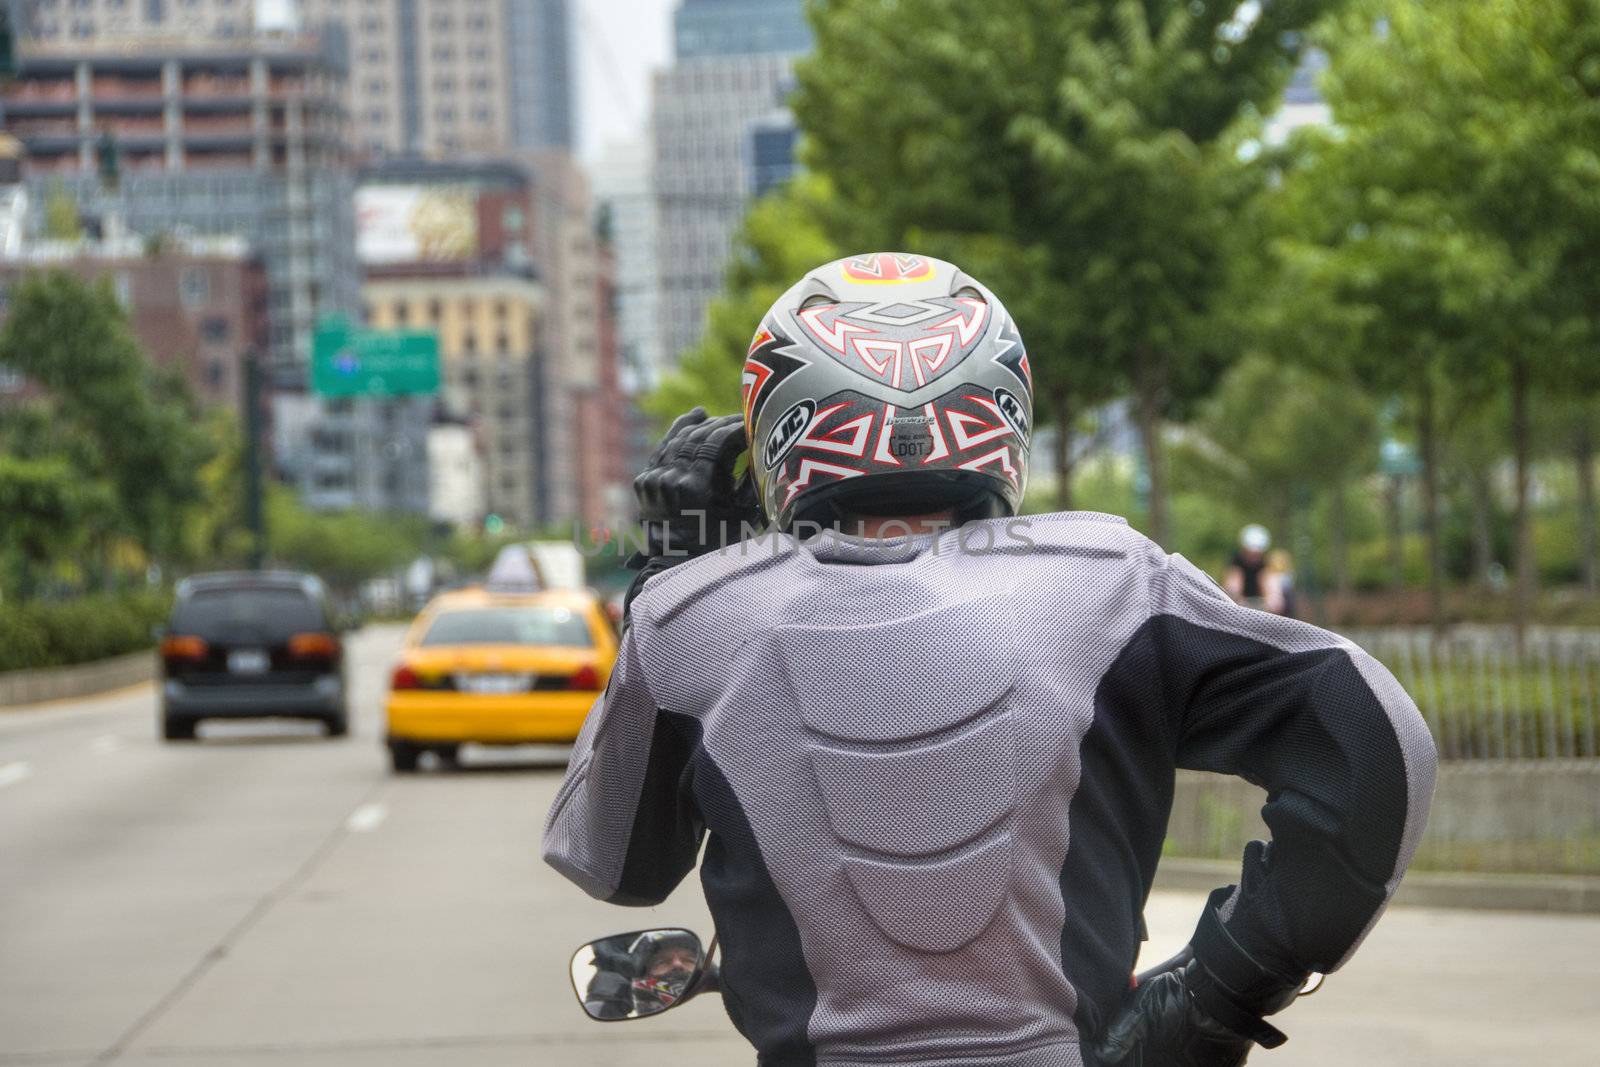 Street Rider in New York City by jovannig